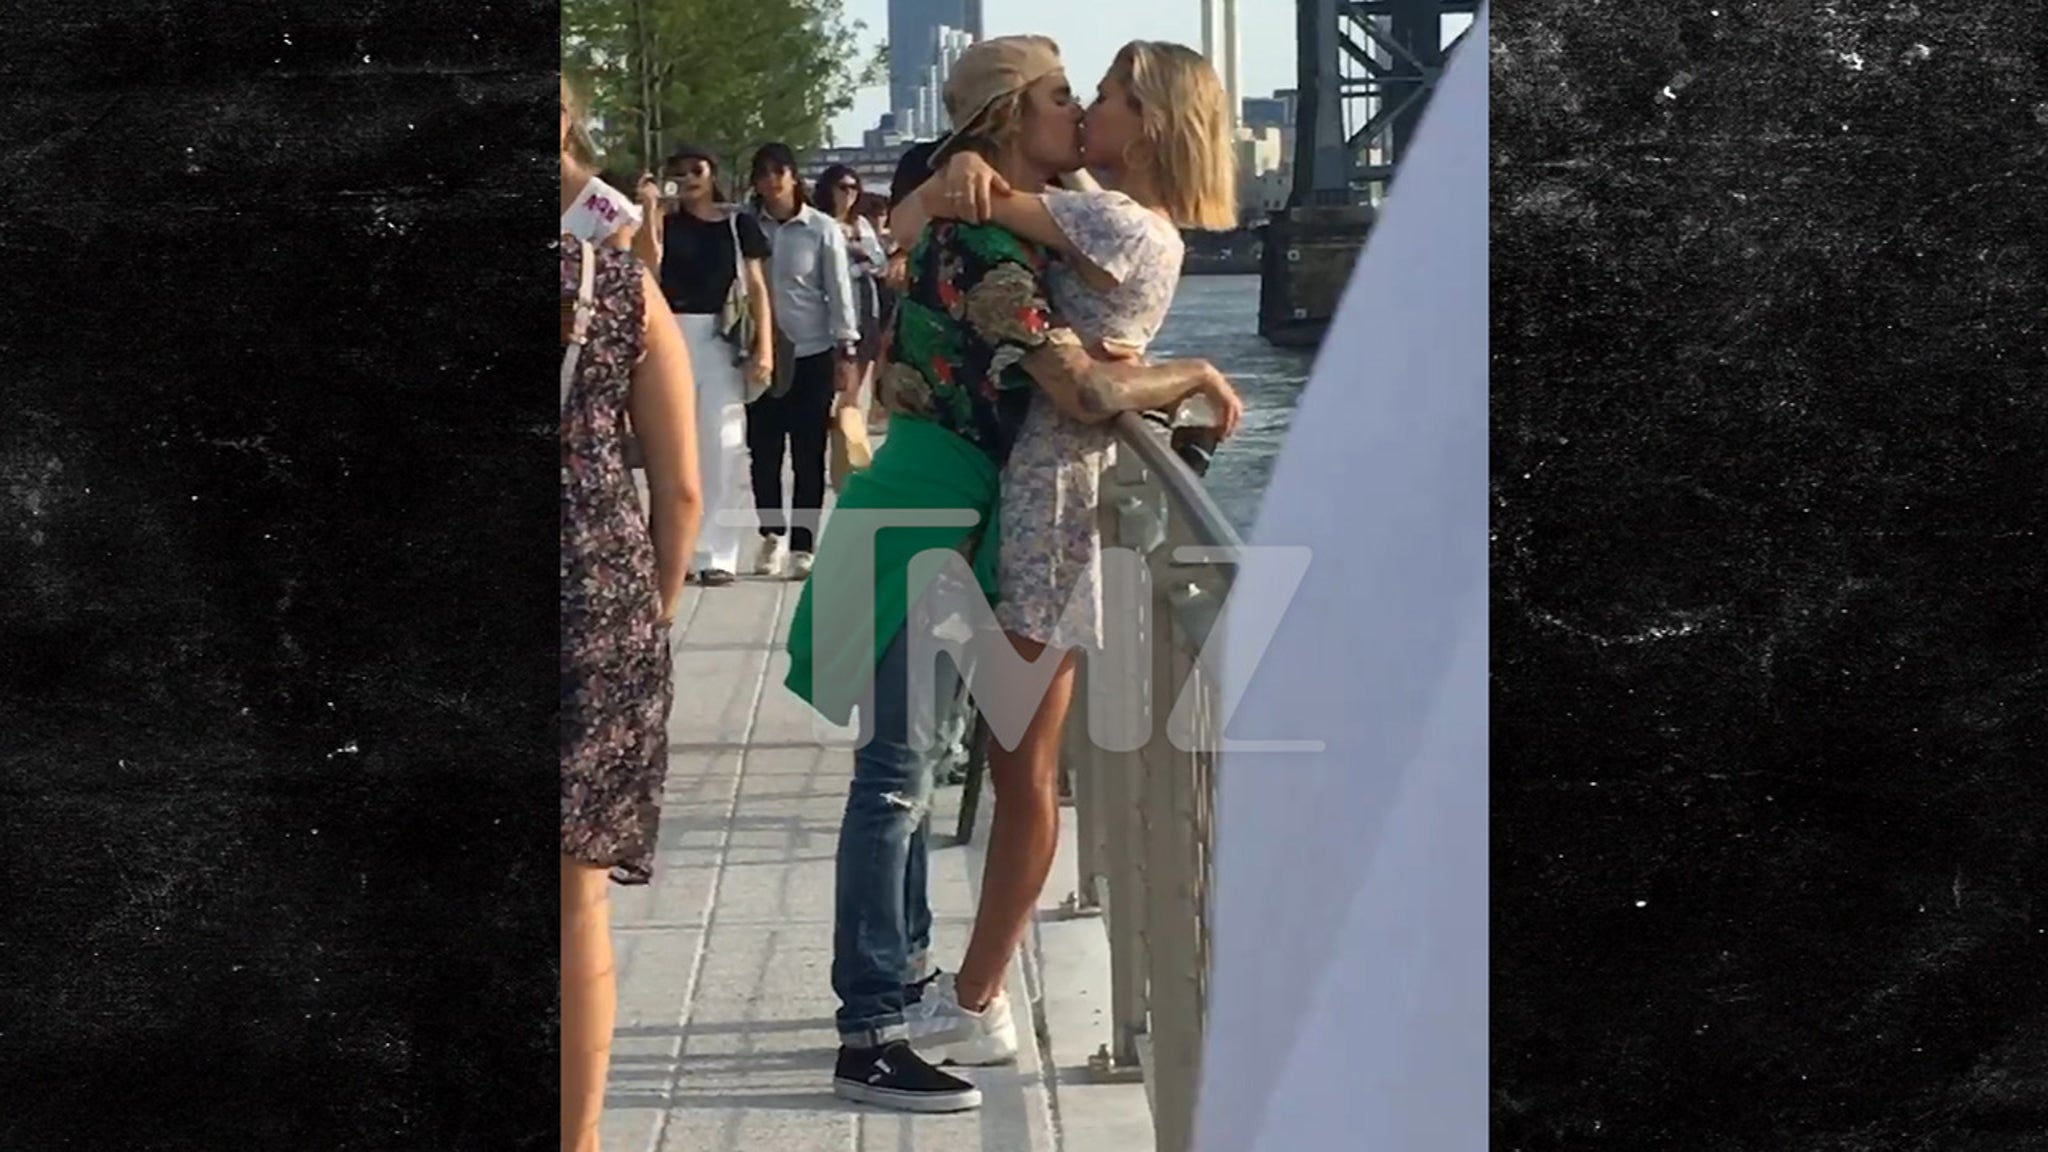 Justin Bieber, Hailey Baldwin share big-screen kiss at Maple Leafs game